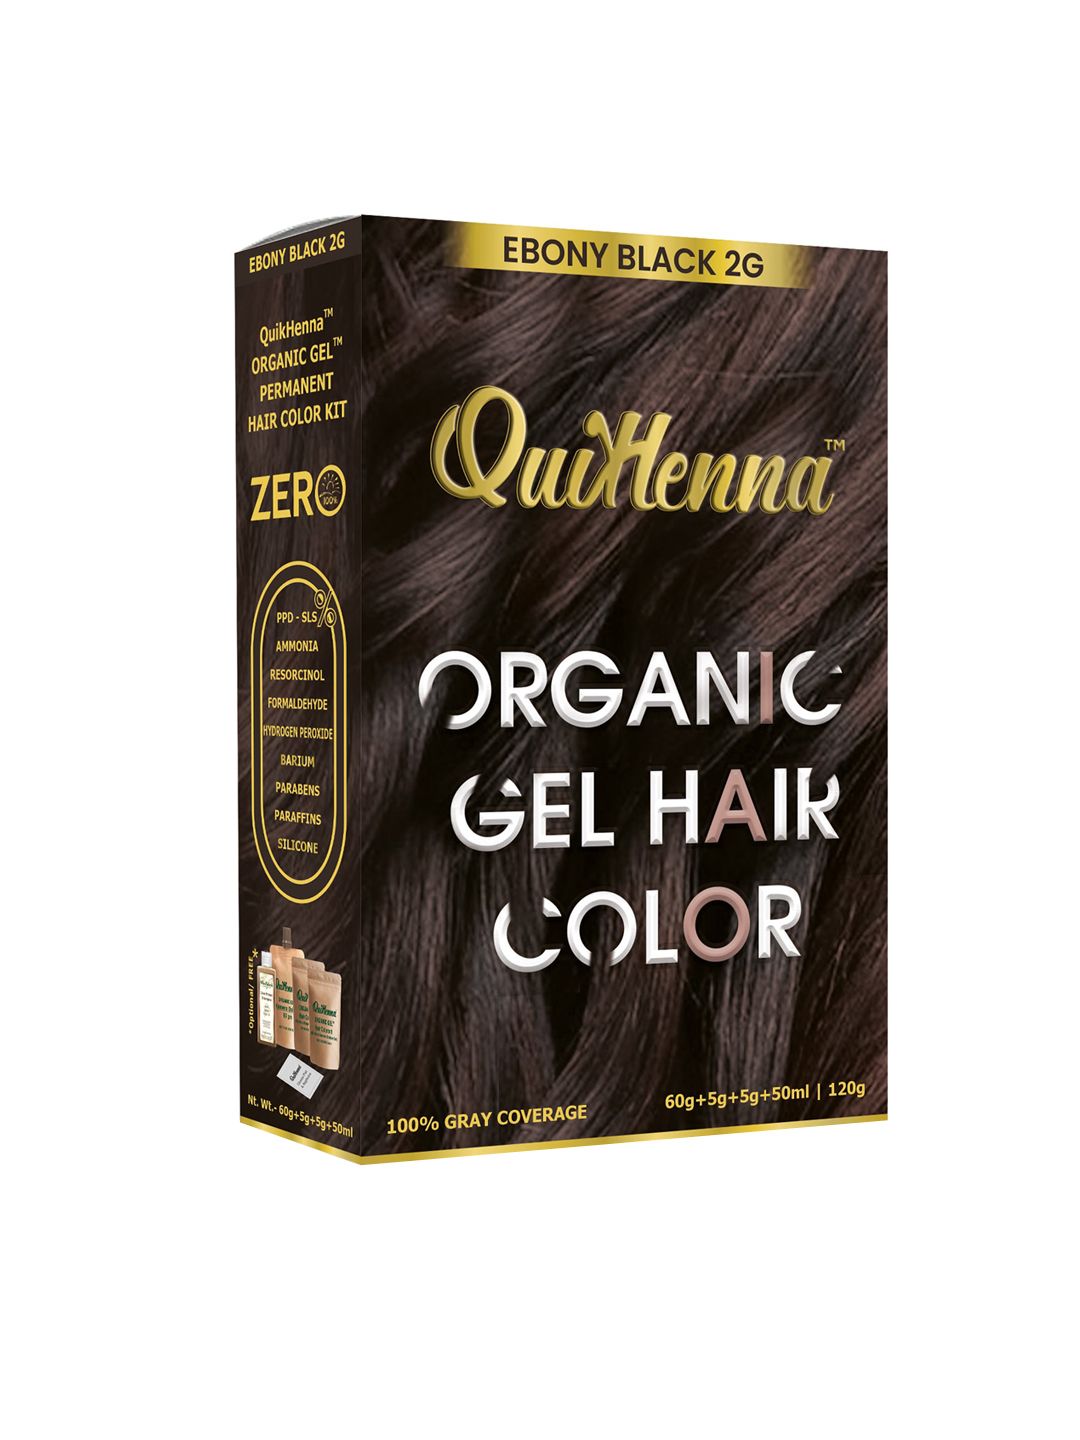 QUIKHENNA Organic Gel Hair Color Ebony Black 2G-120g Price in India